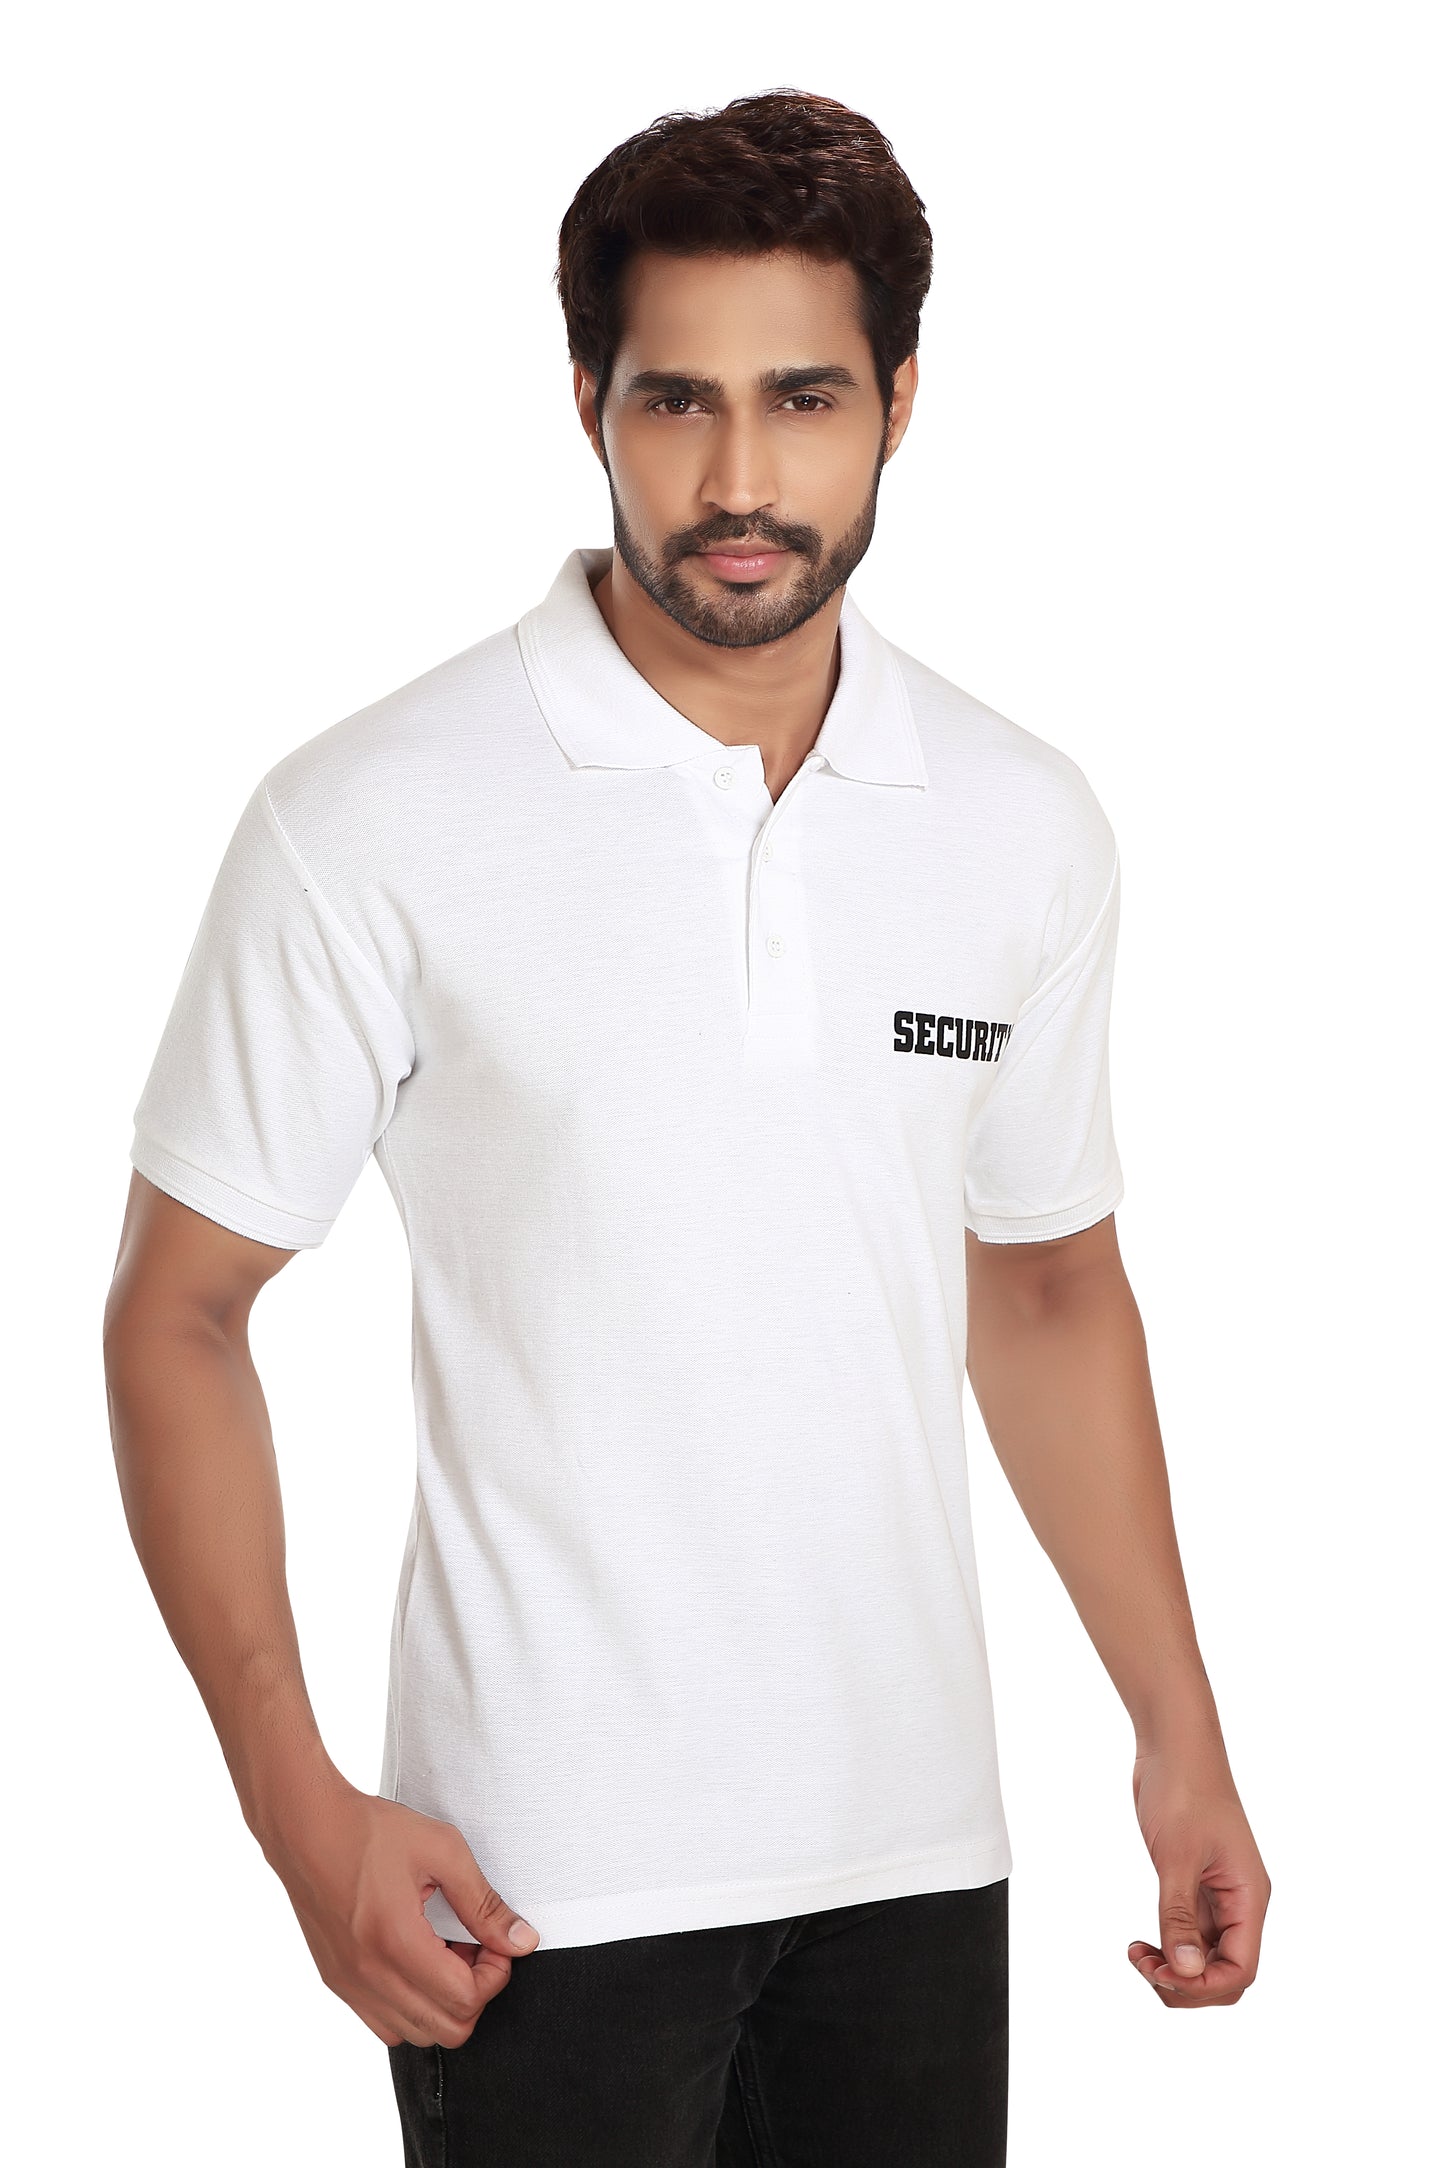 Security Guard 100% Cotton T-Shirt - White